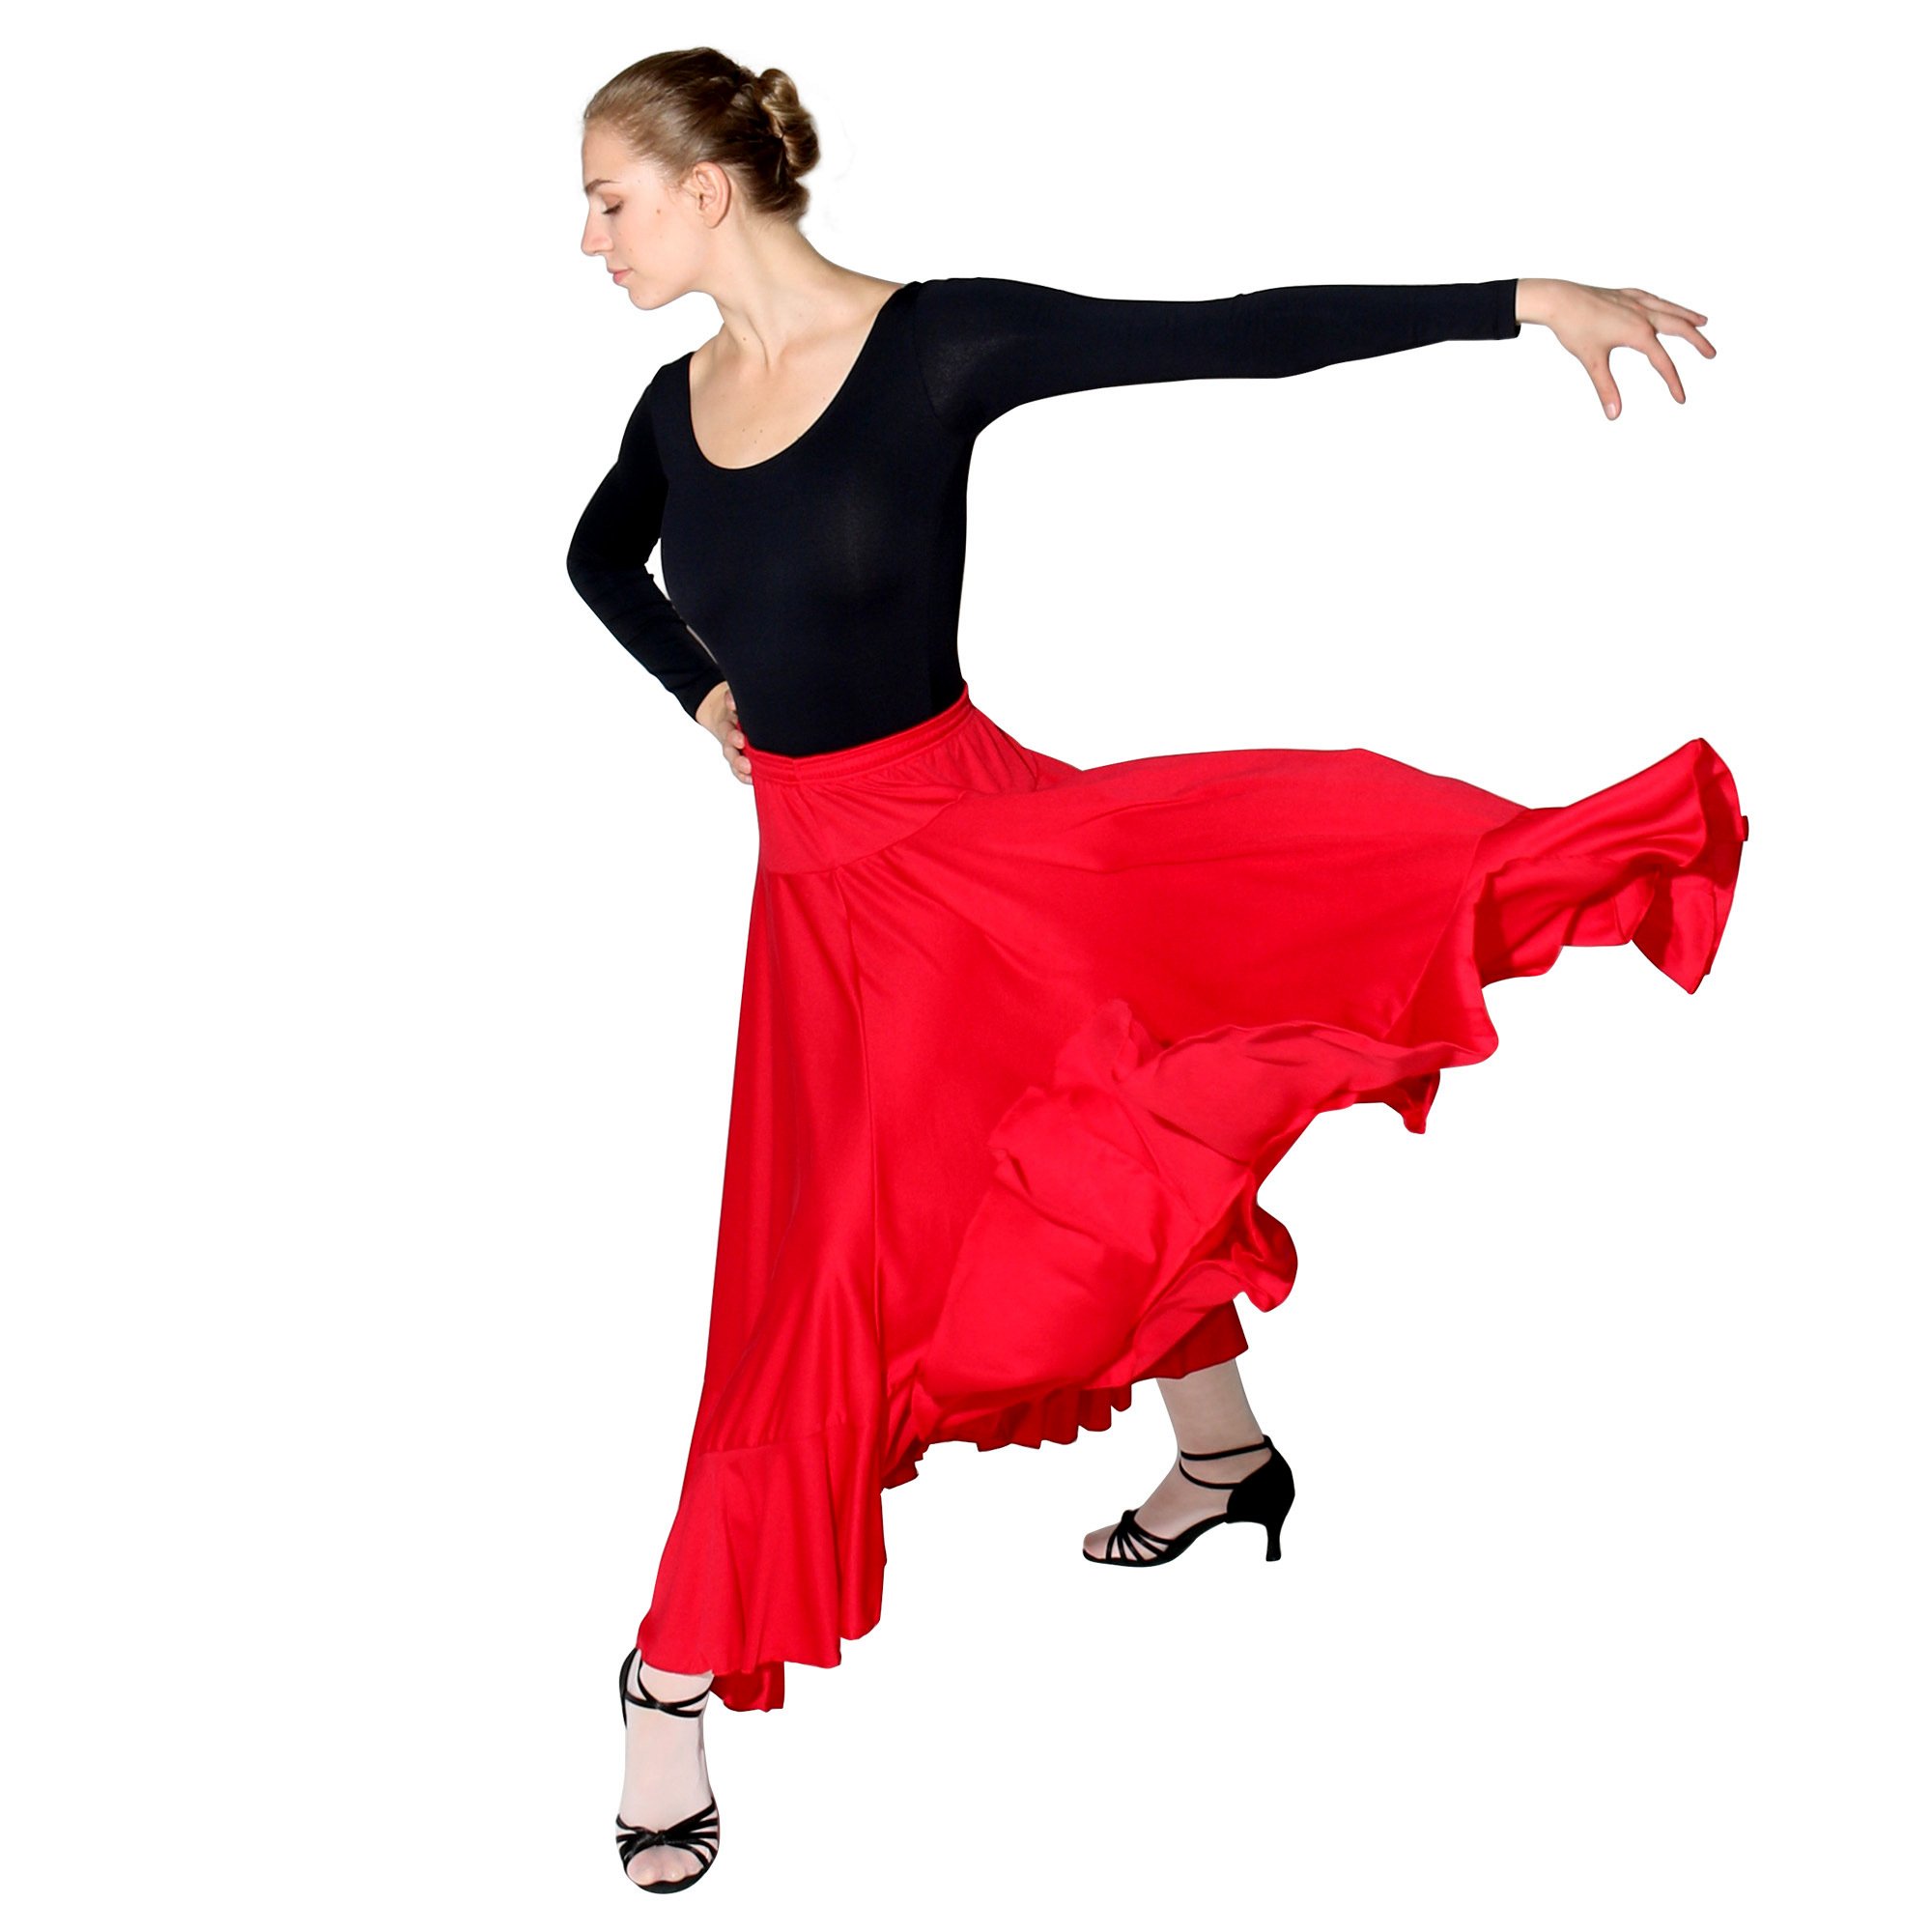 Danzcue Full Circle Flamenco Skirt - Click Image to Close